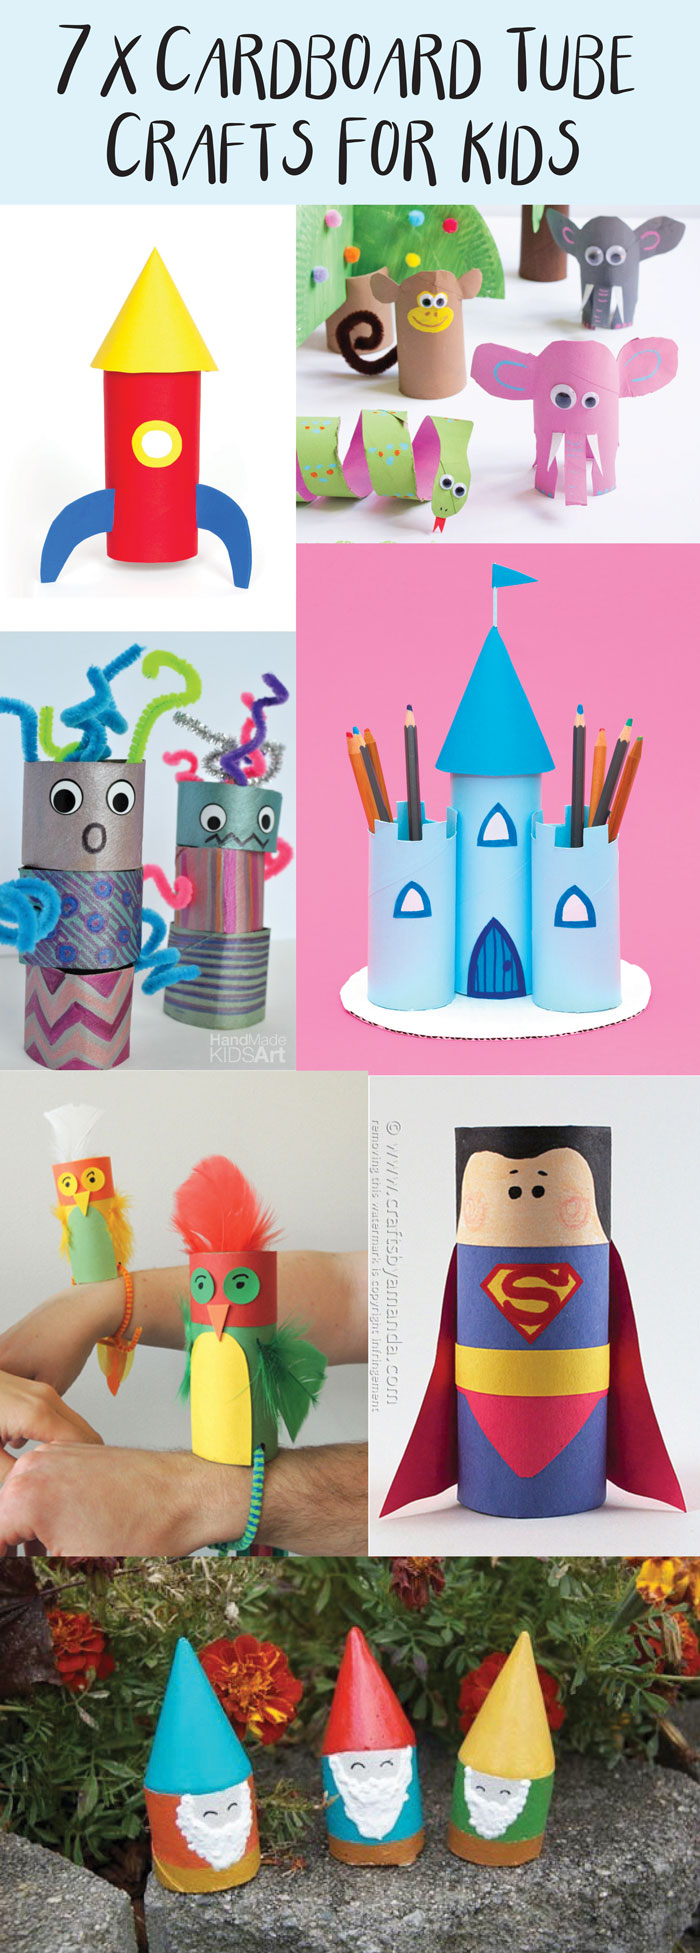 10 cardboard tube crafts  Cardboard tube crafts, Crafts, Crafts for kids